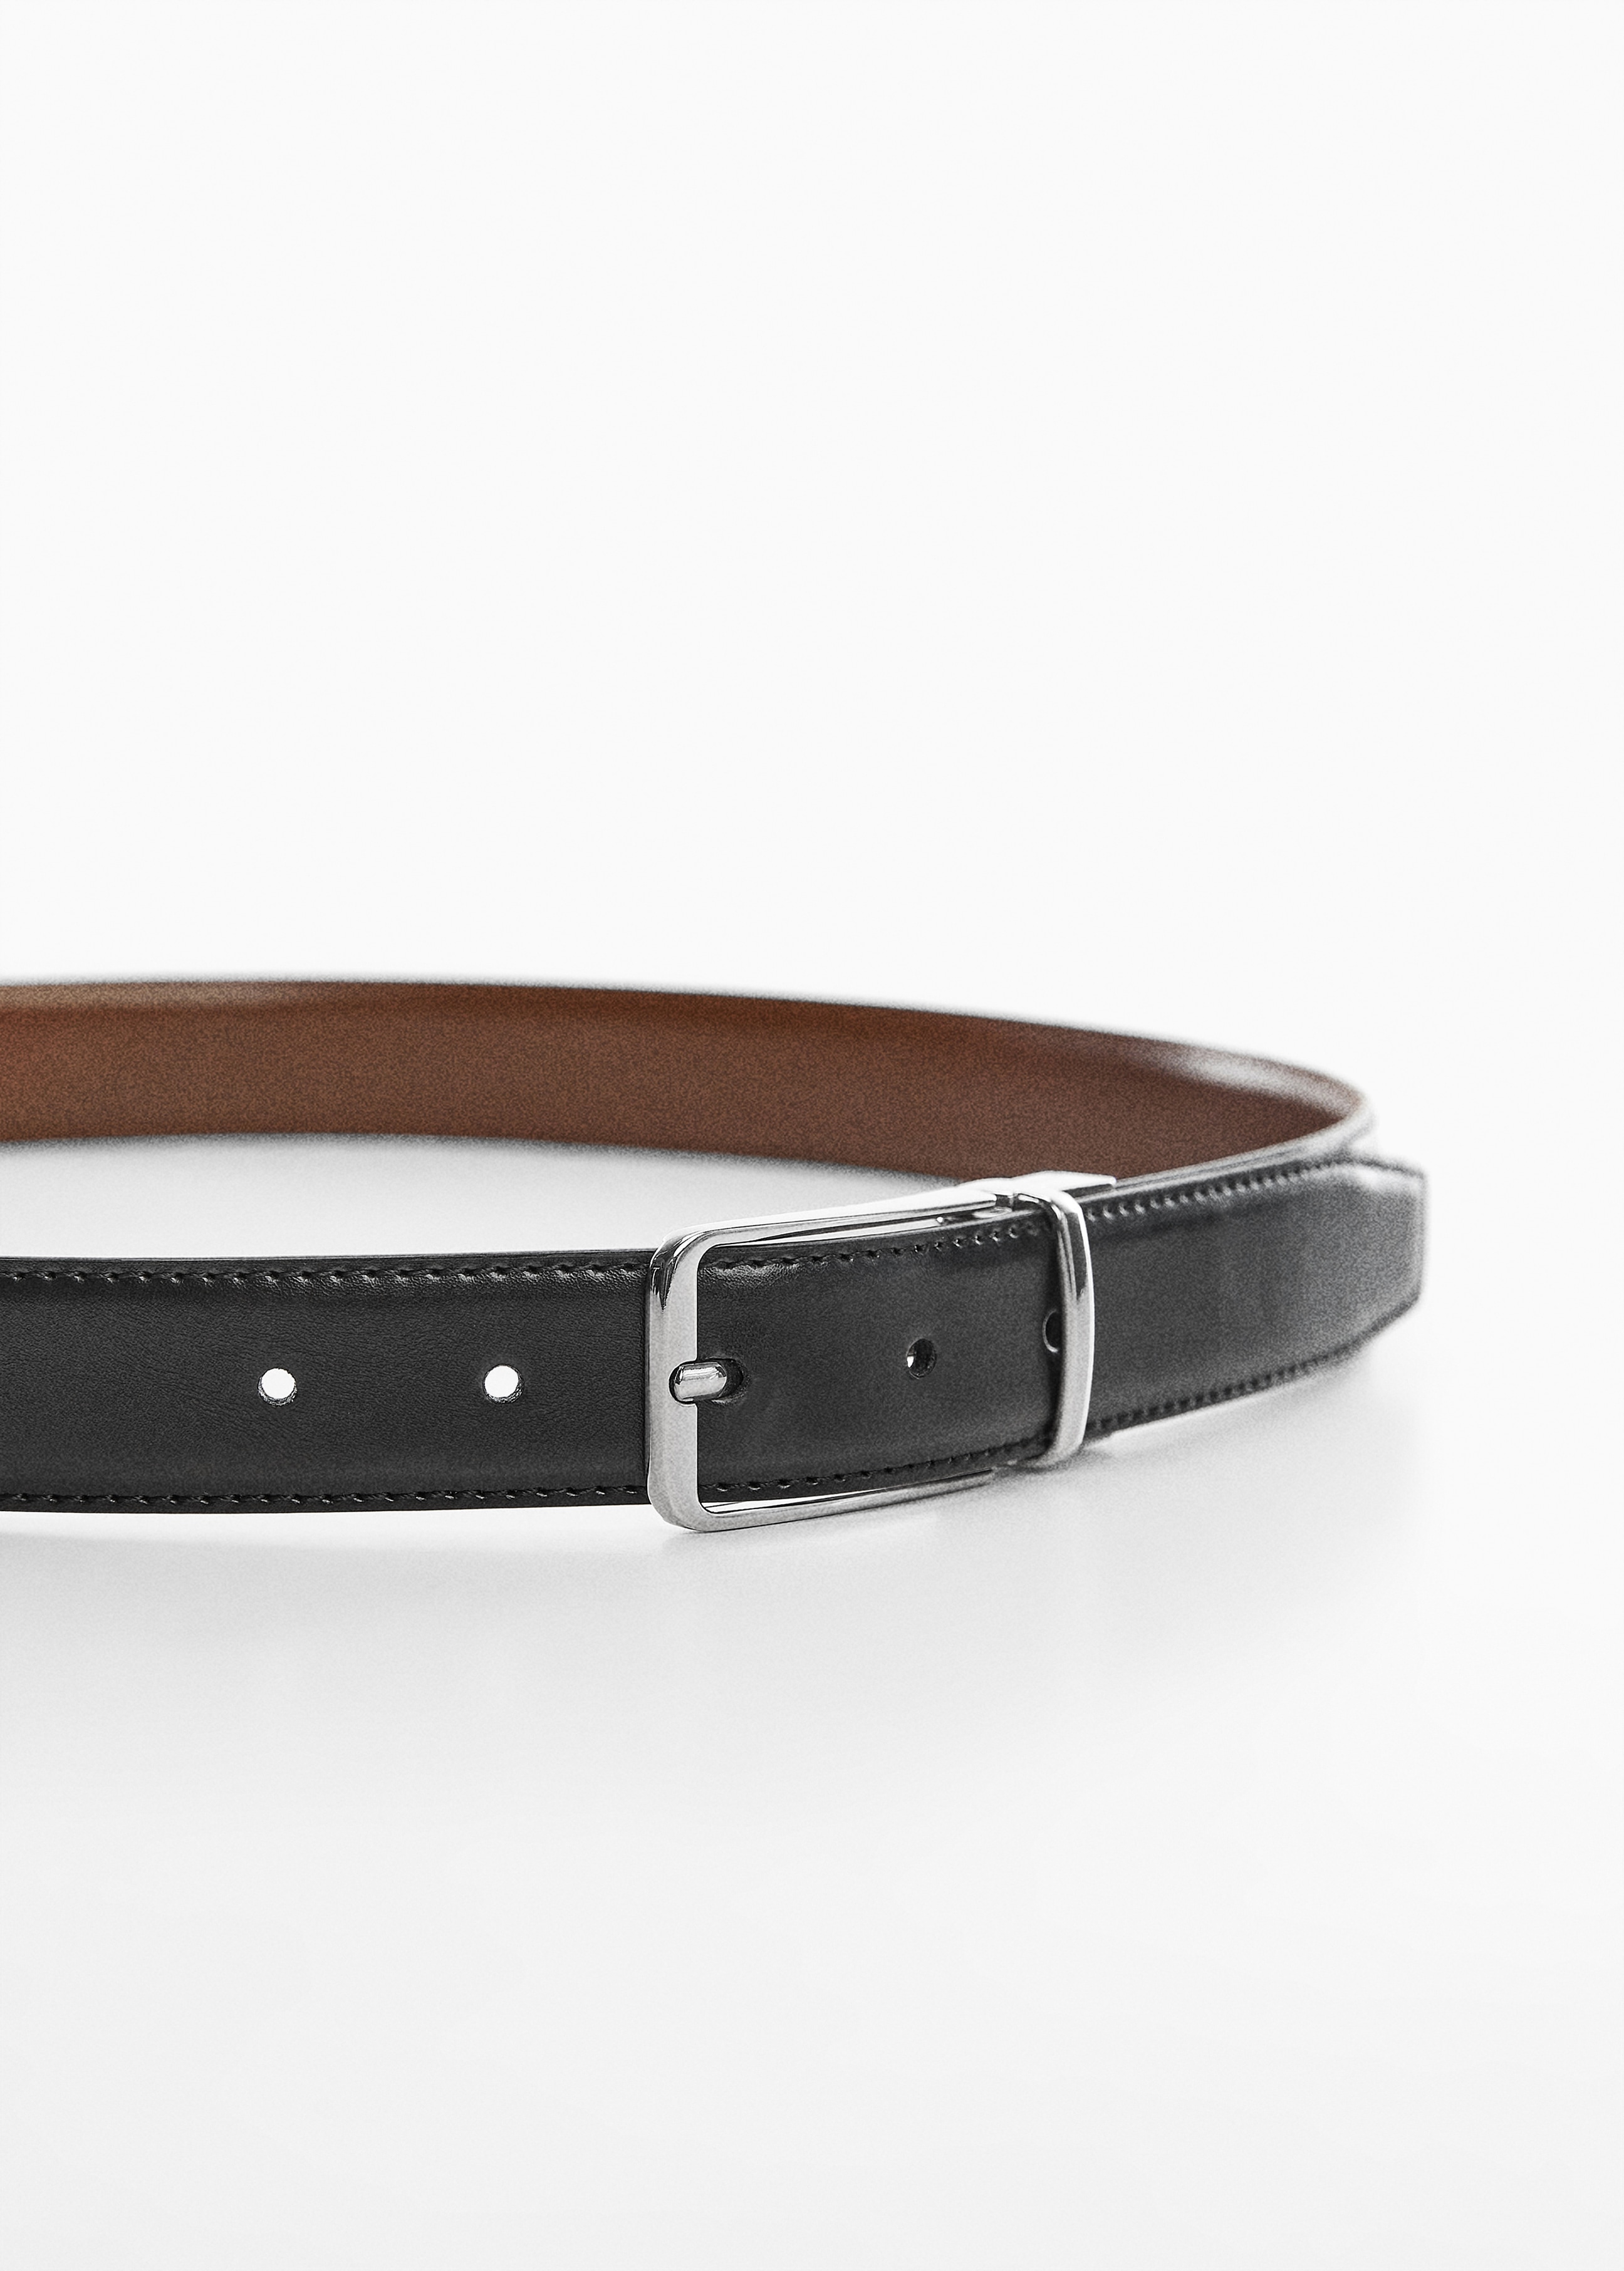 Leather reversible belt - Medium plane